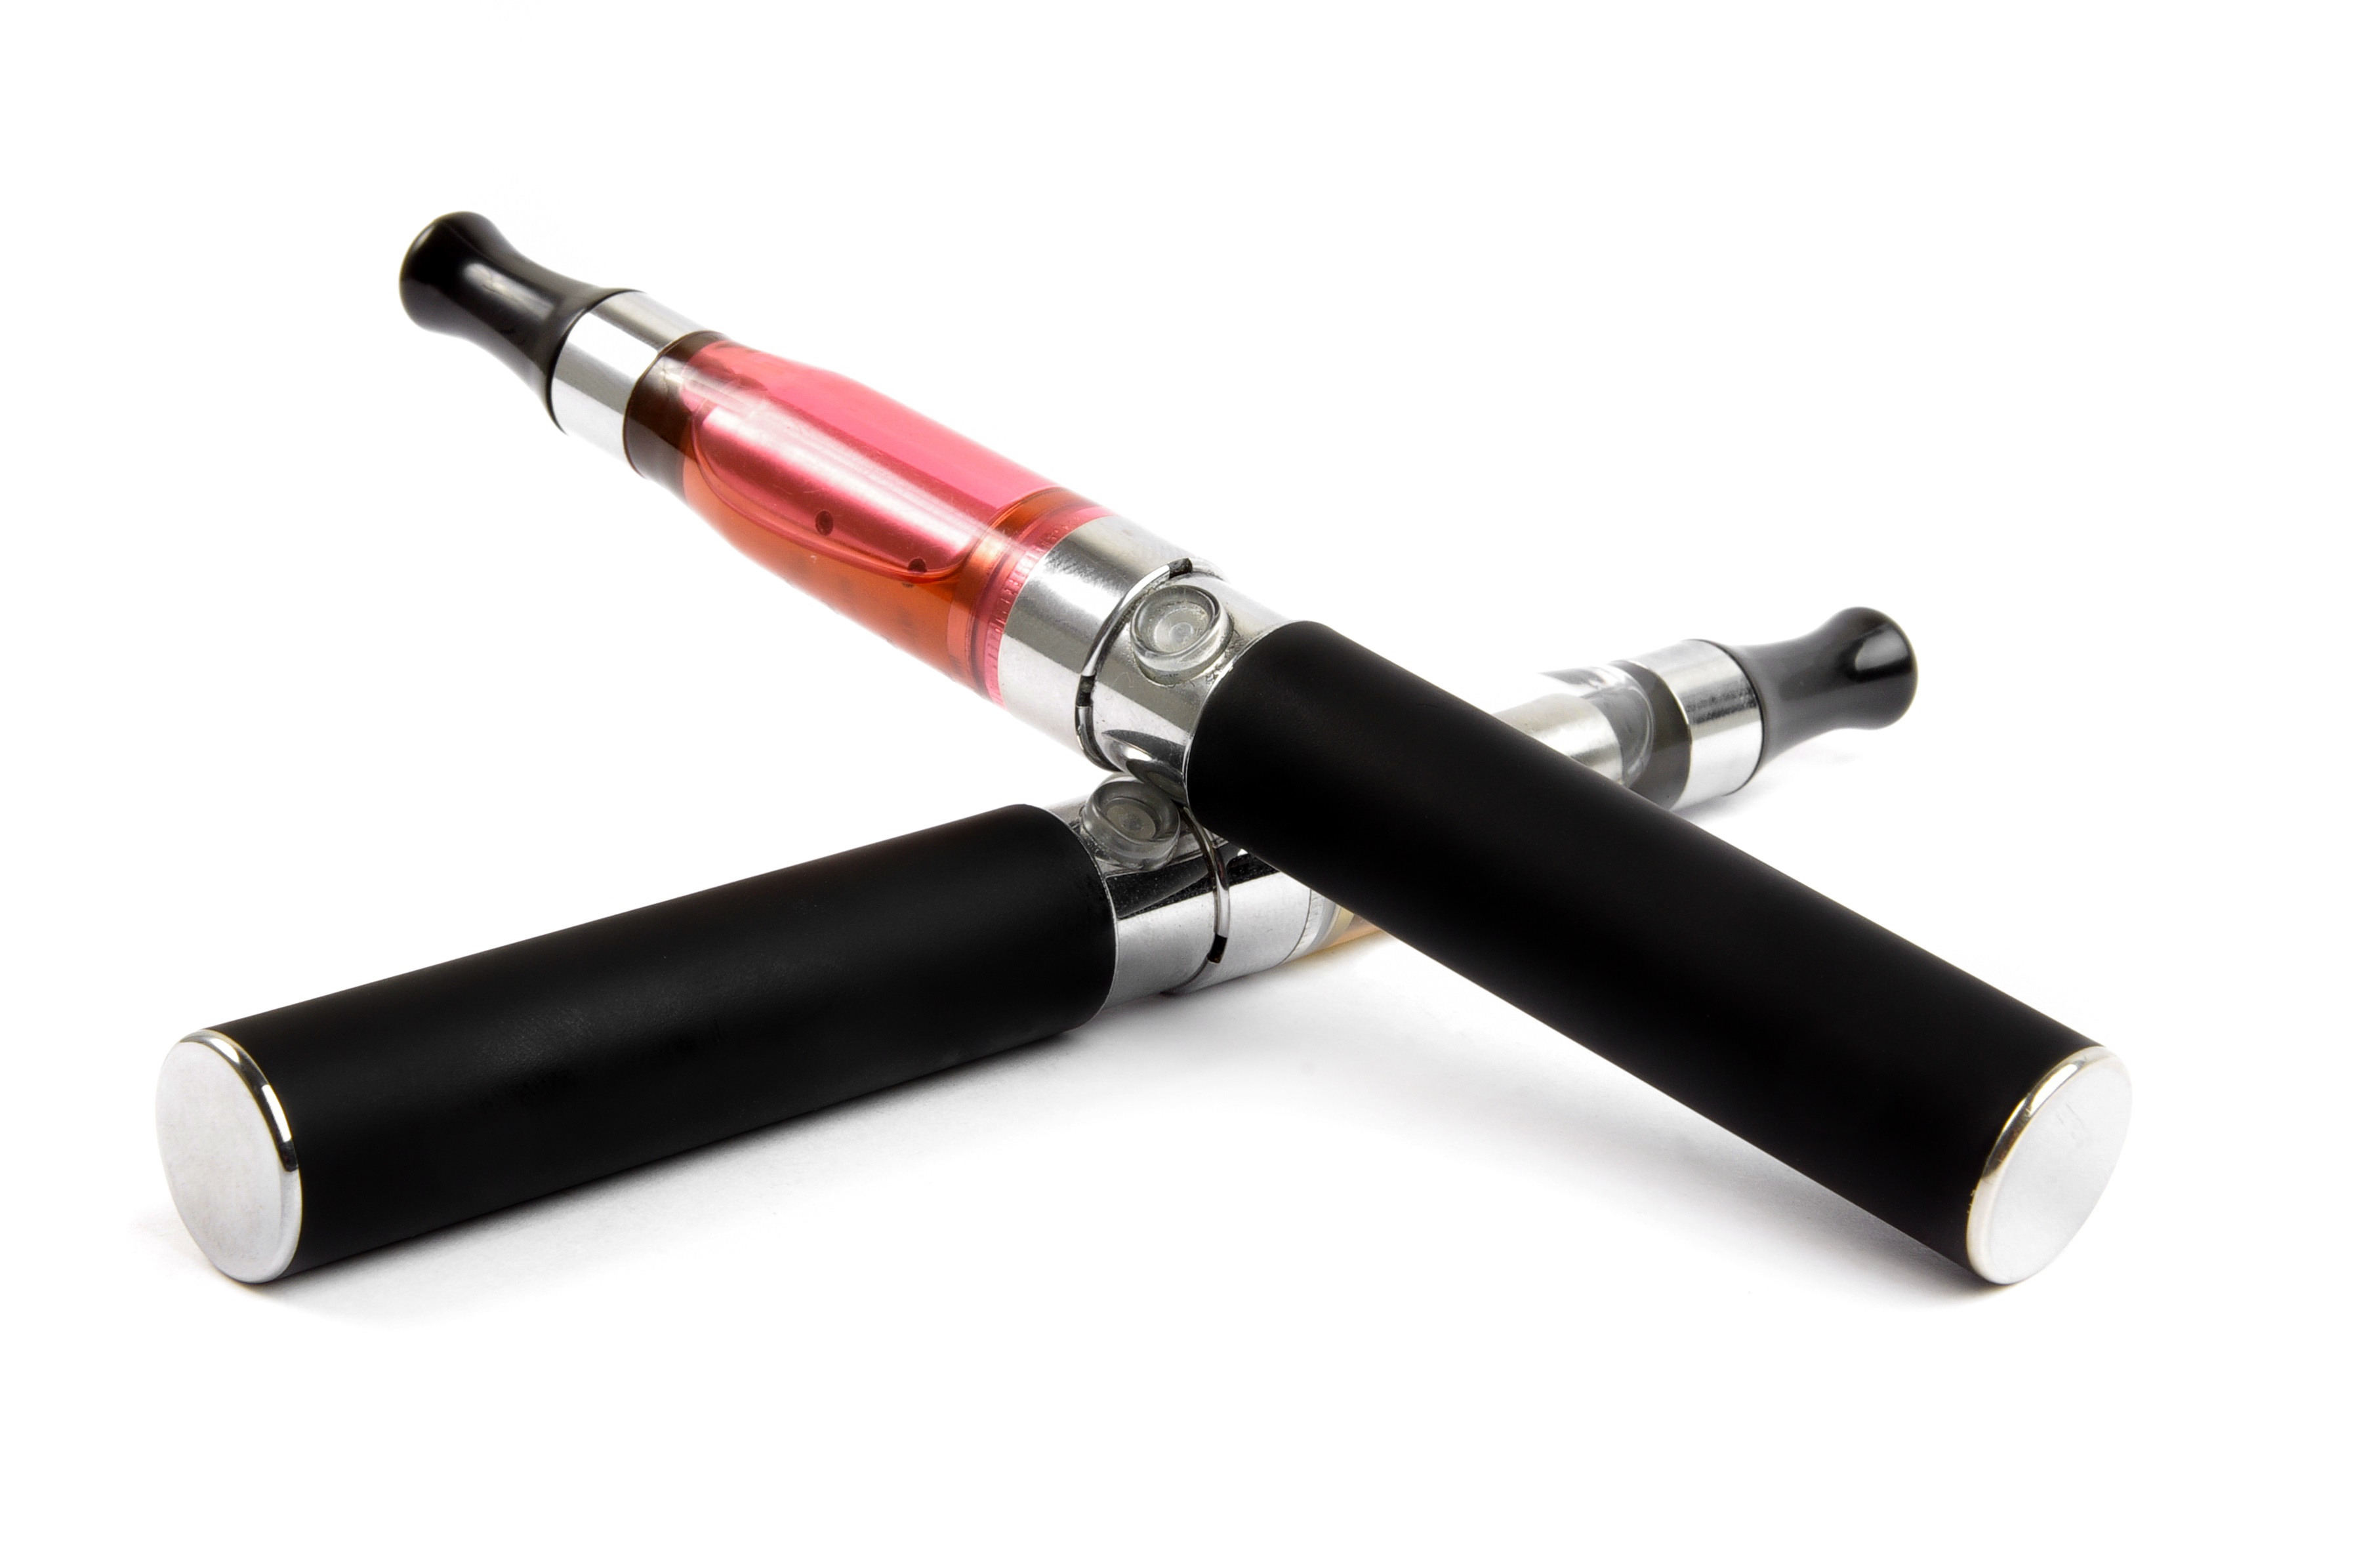 New E-Cigarette Regulations, FDA Creates Final Rule